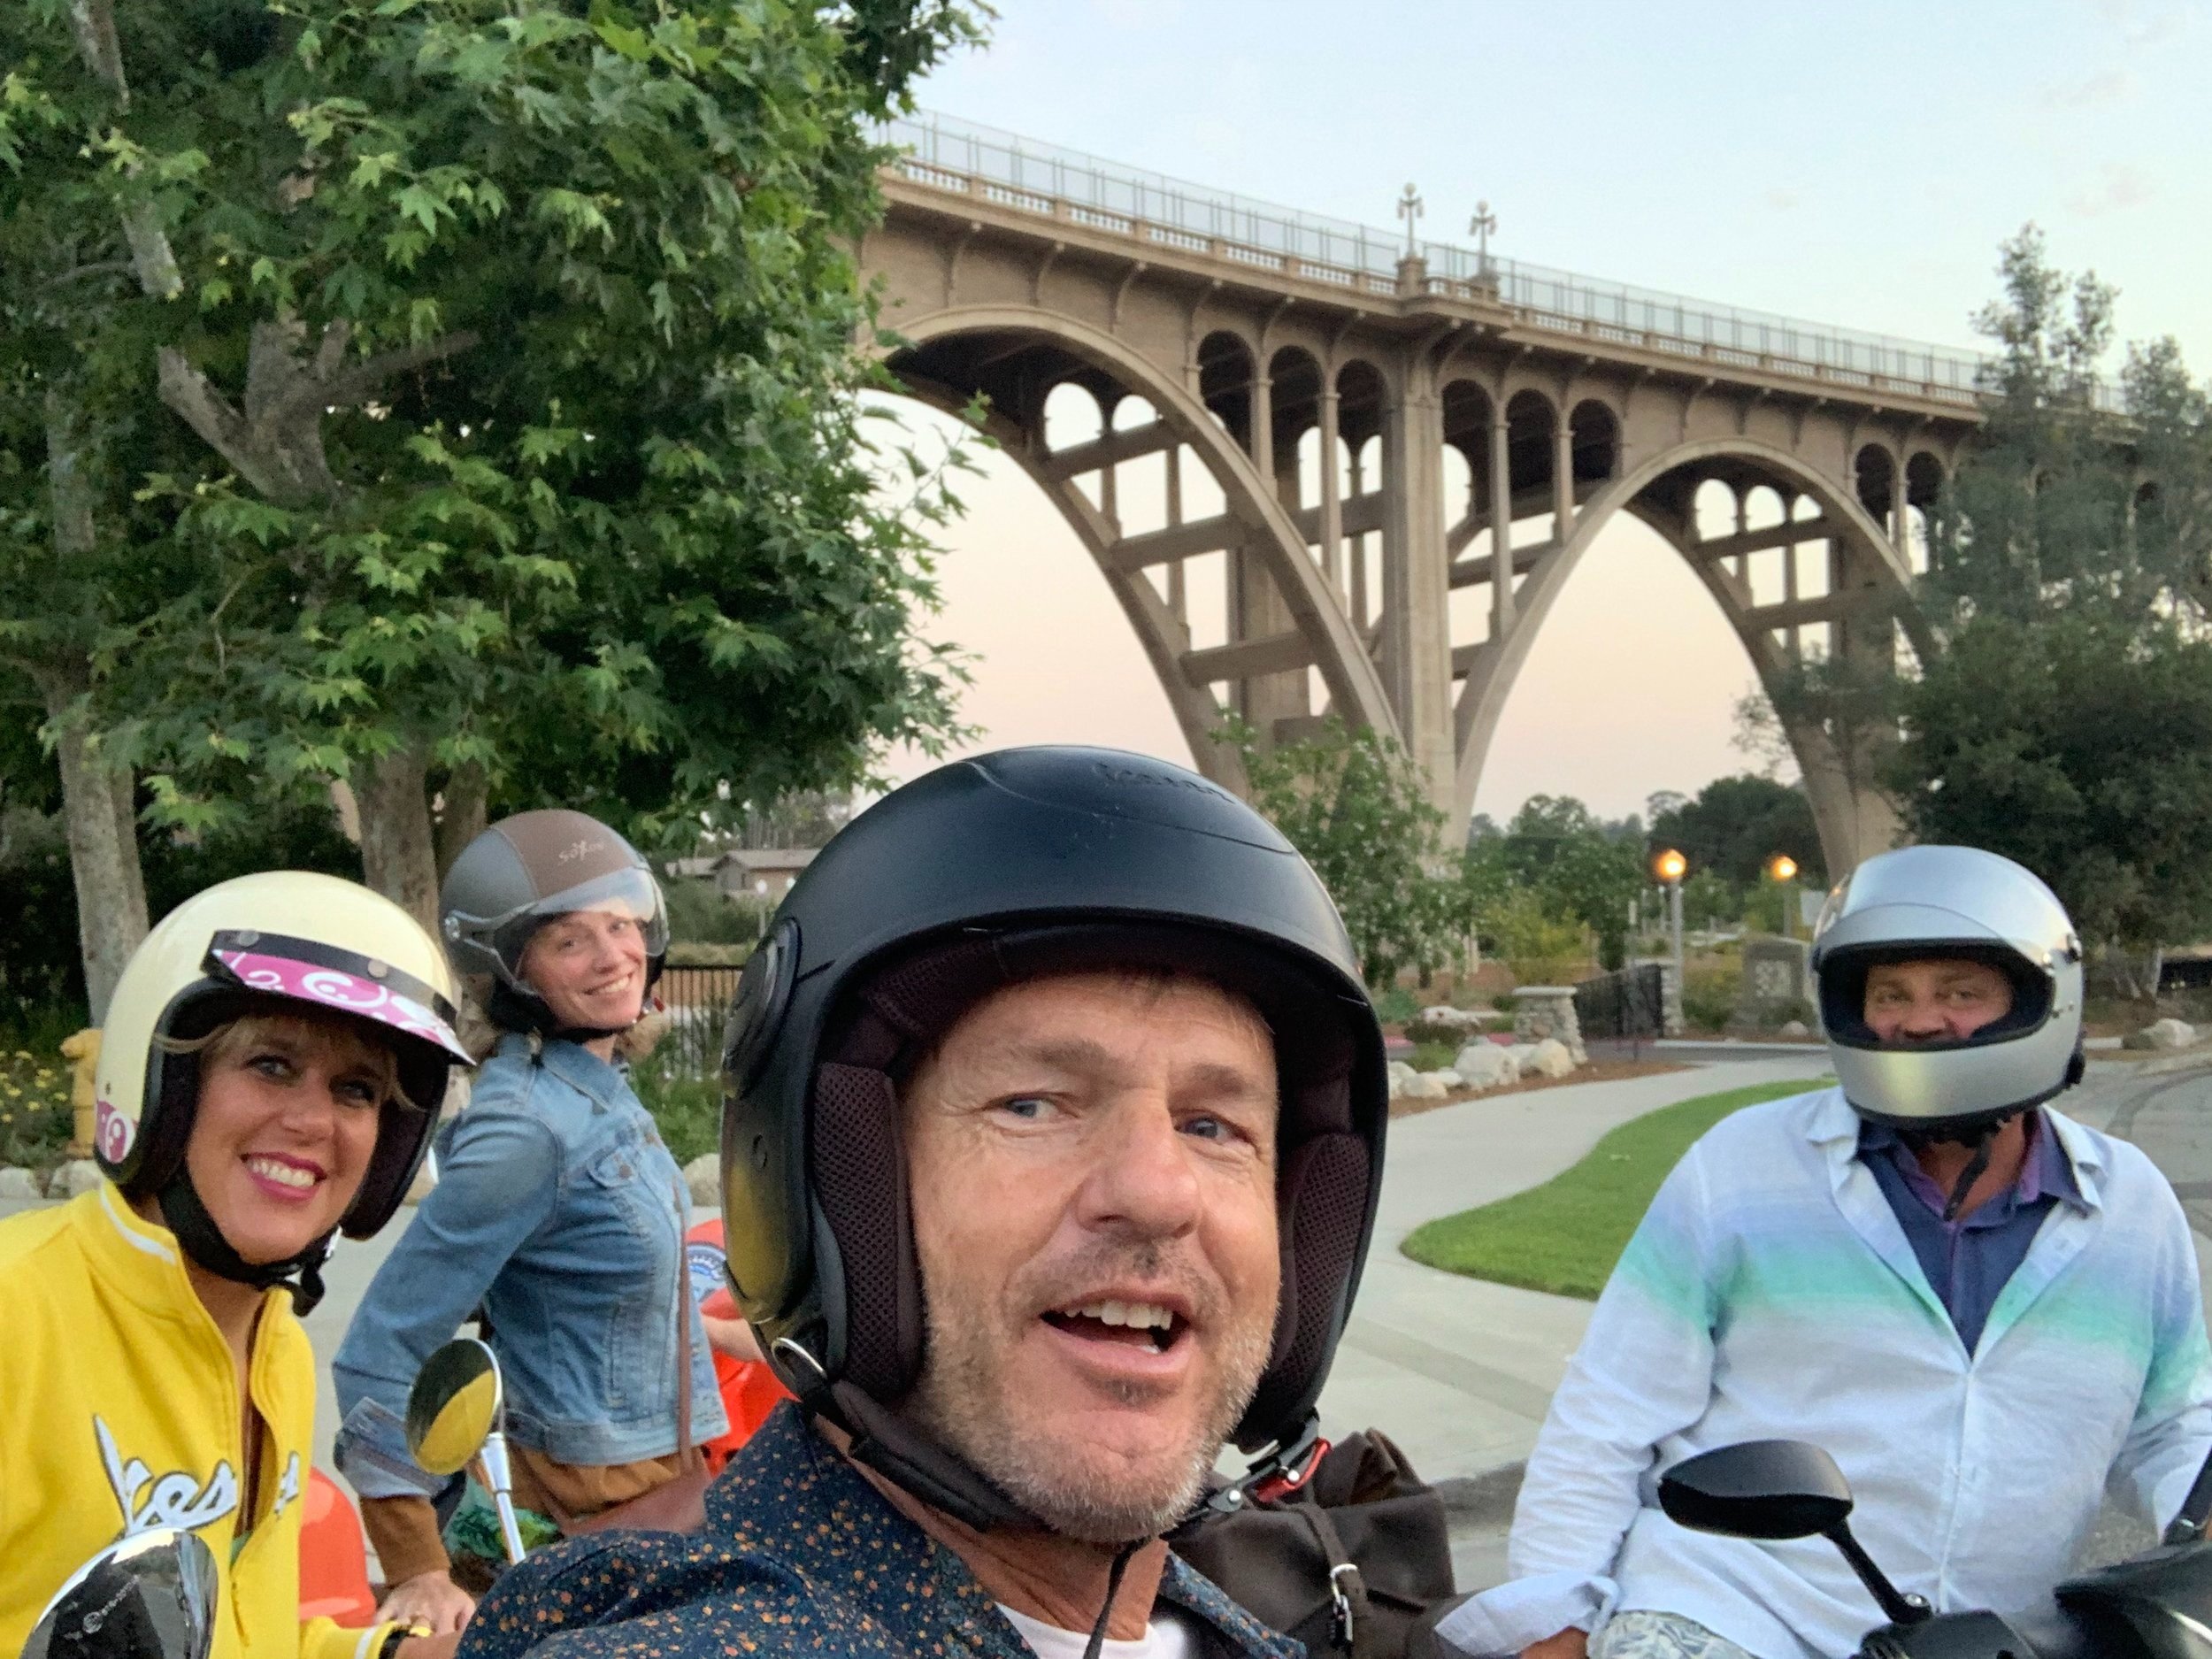 Vespa ride with friends through Pasadena, CA